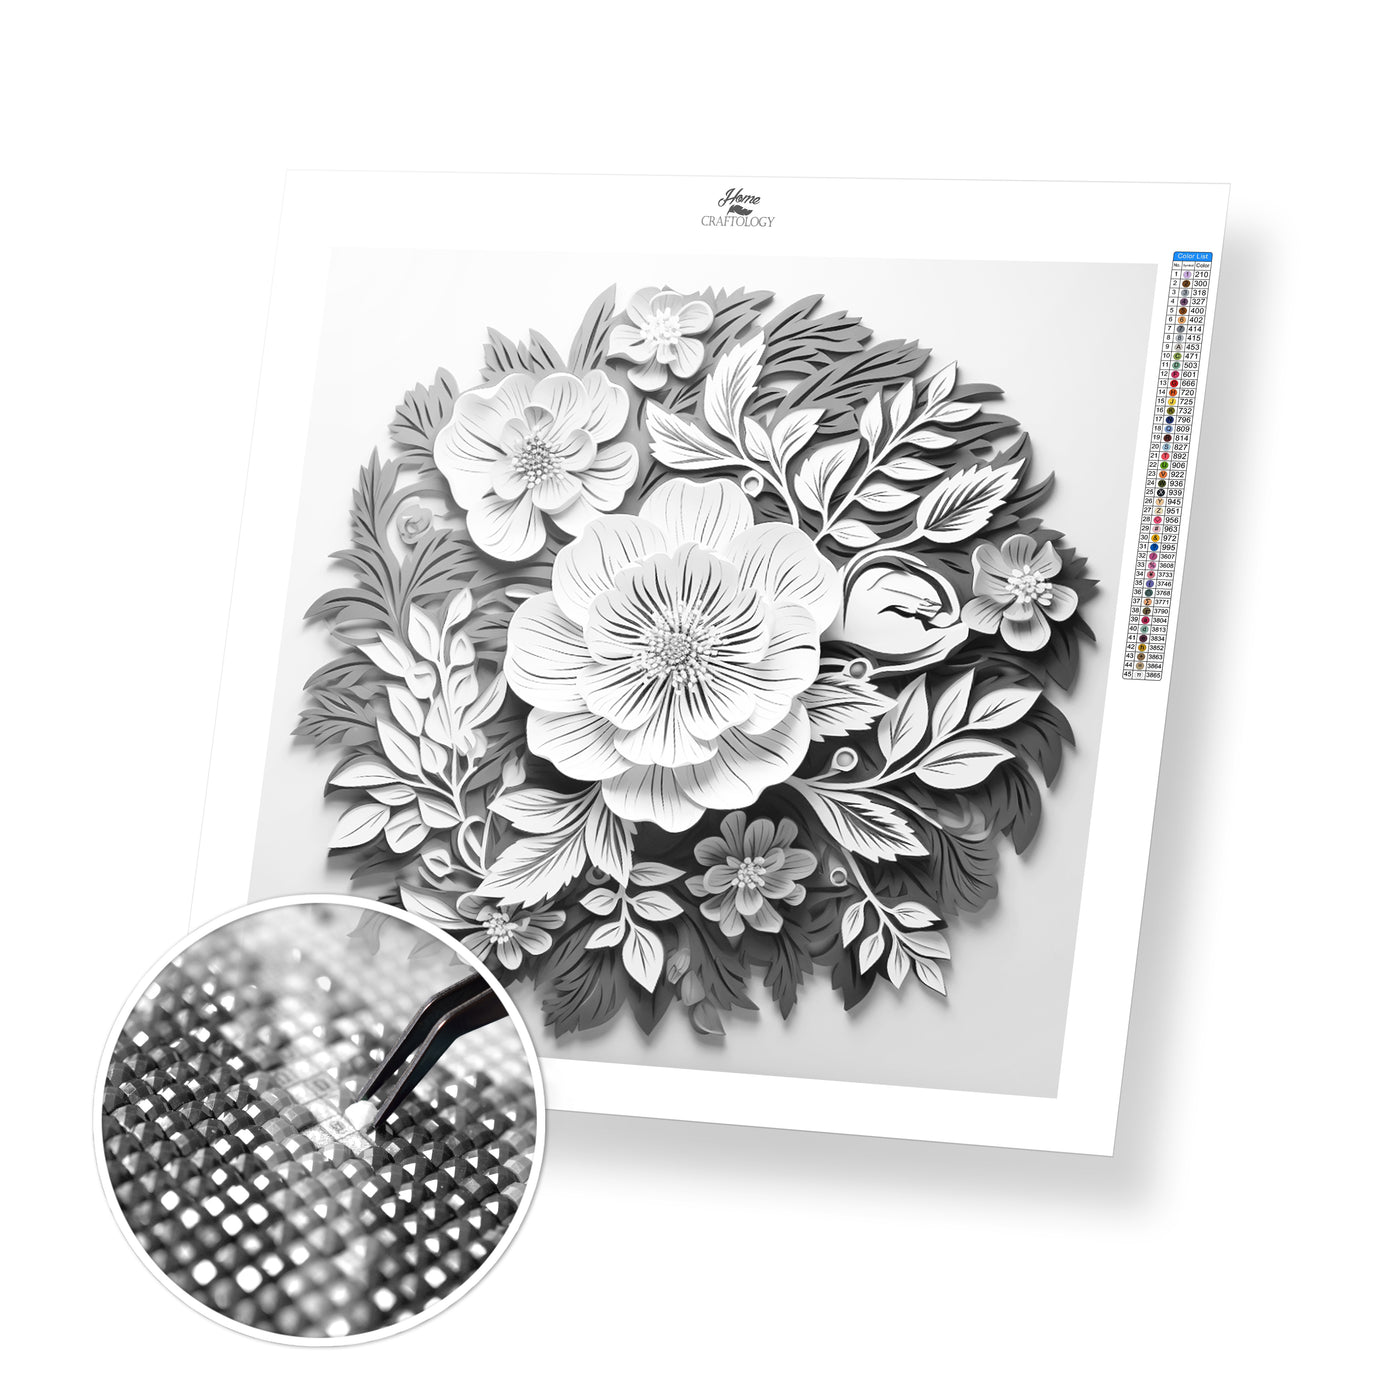 White Flowers with Leaves - Premium Diamond Painting Kit